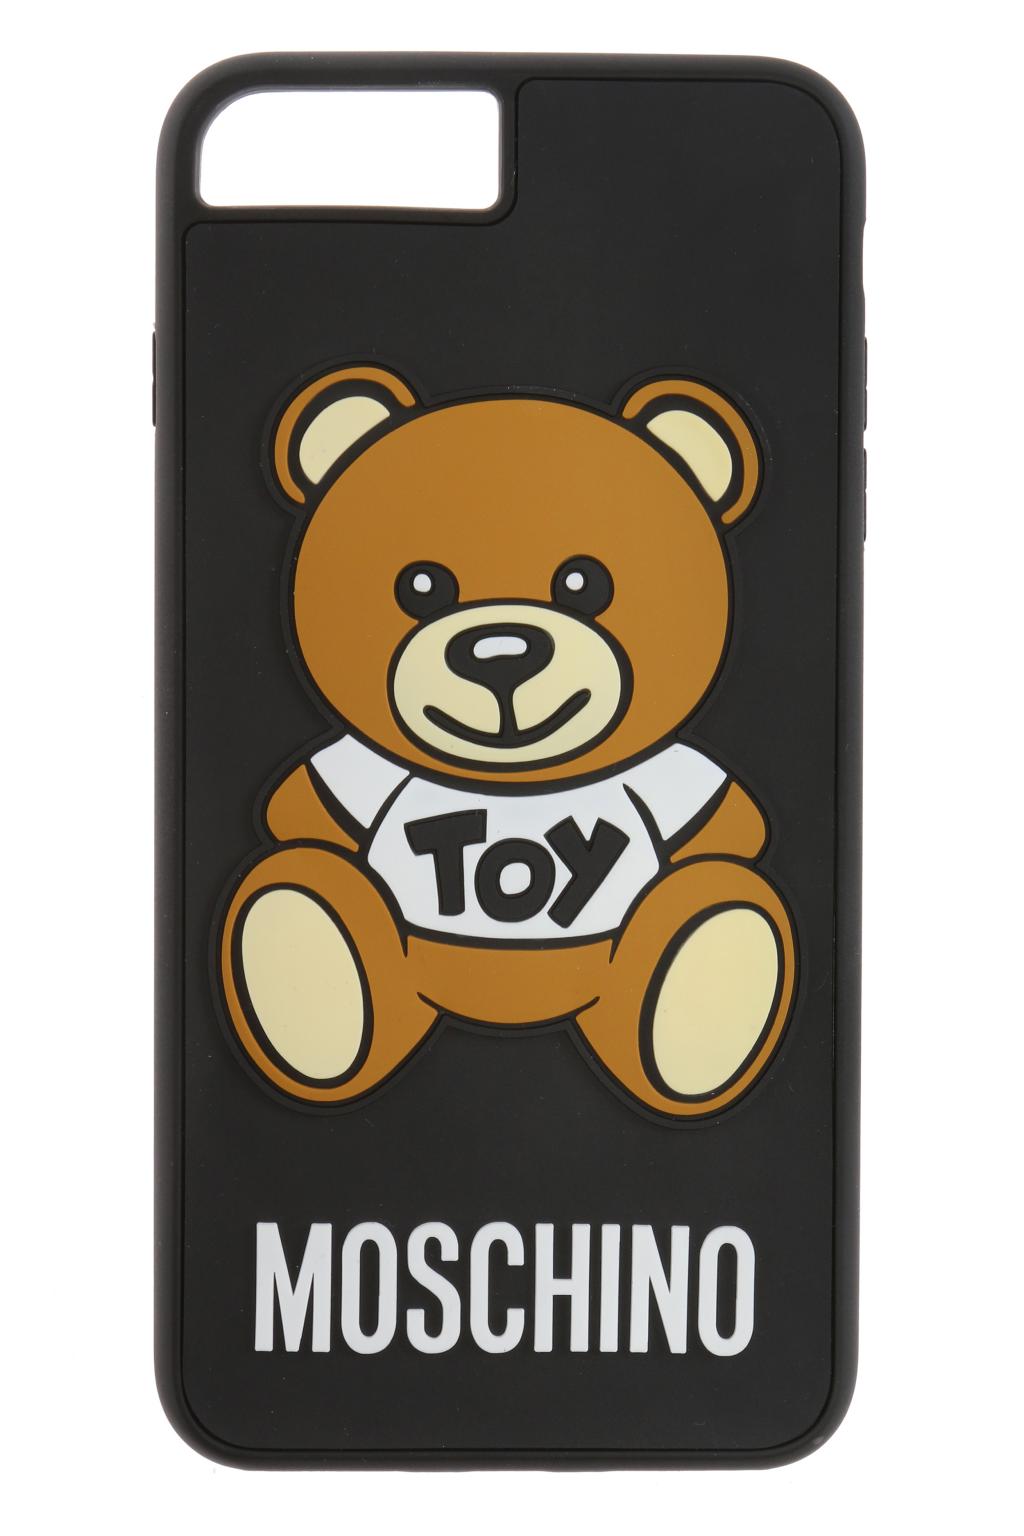 moschino phone case iphone 6s